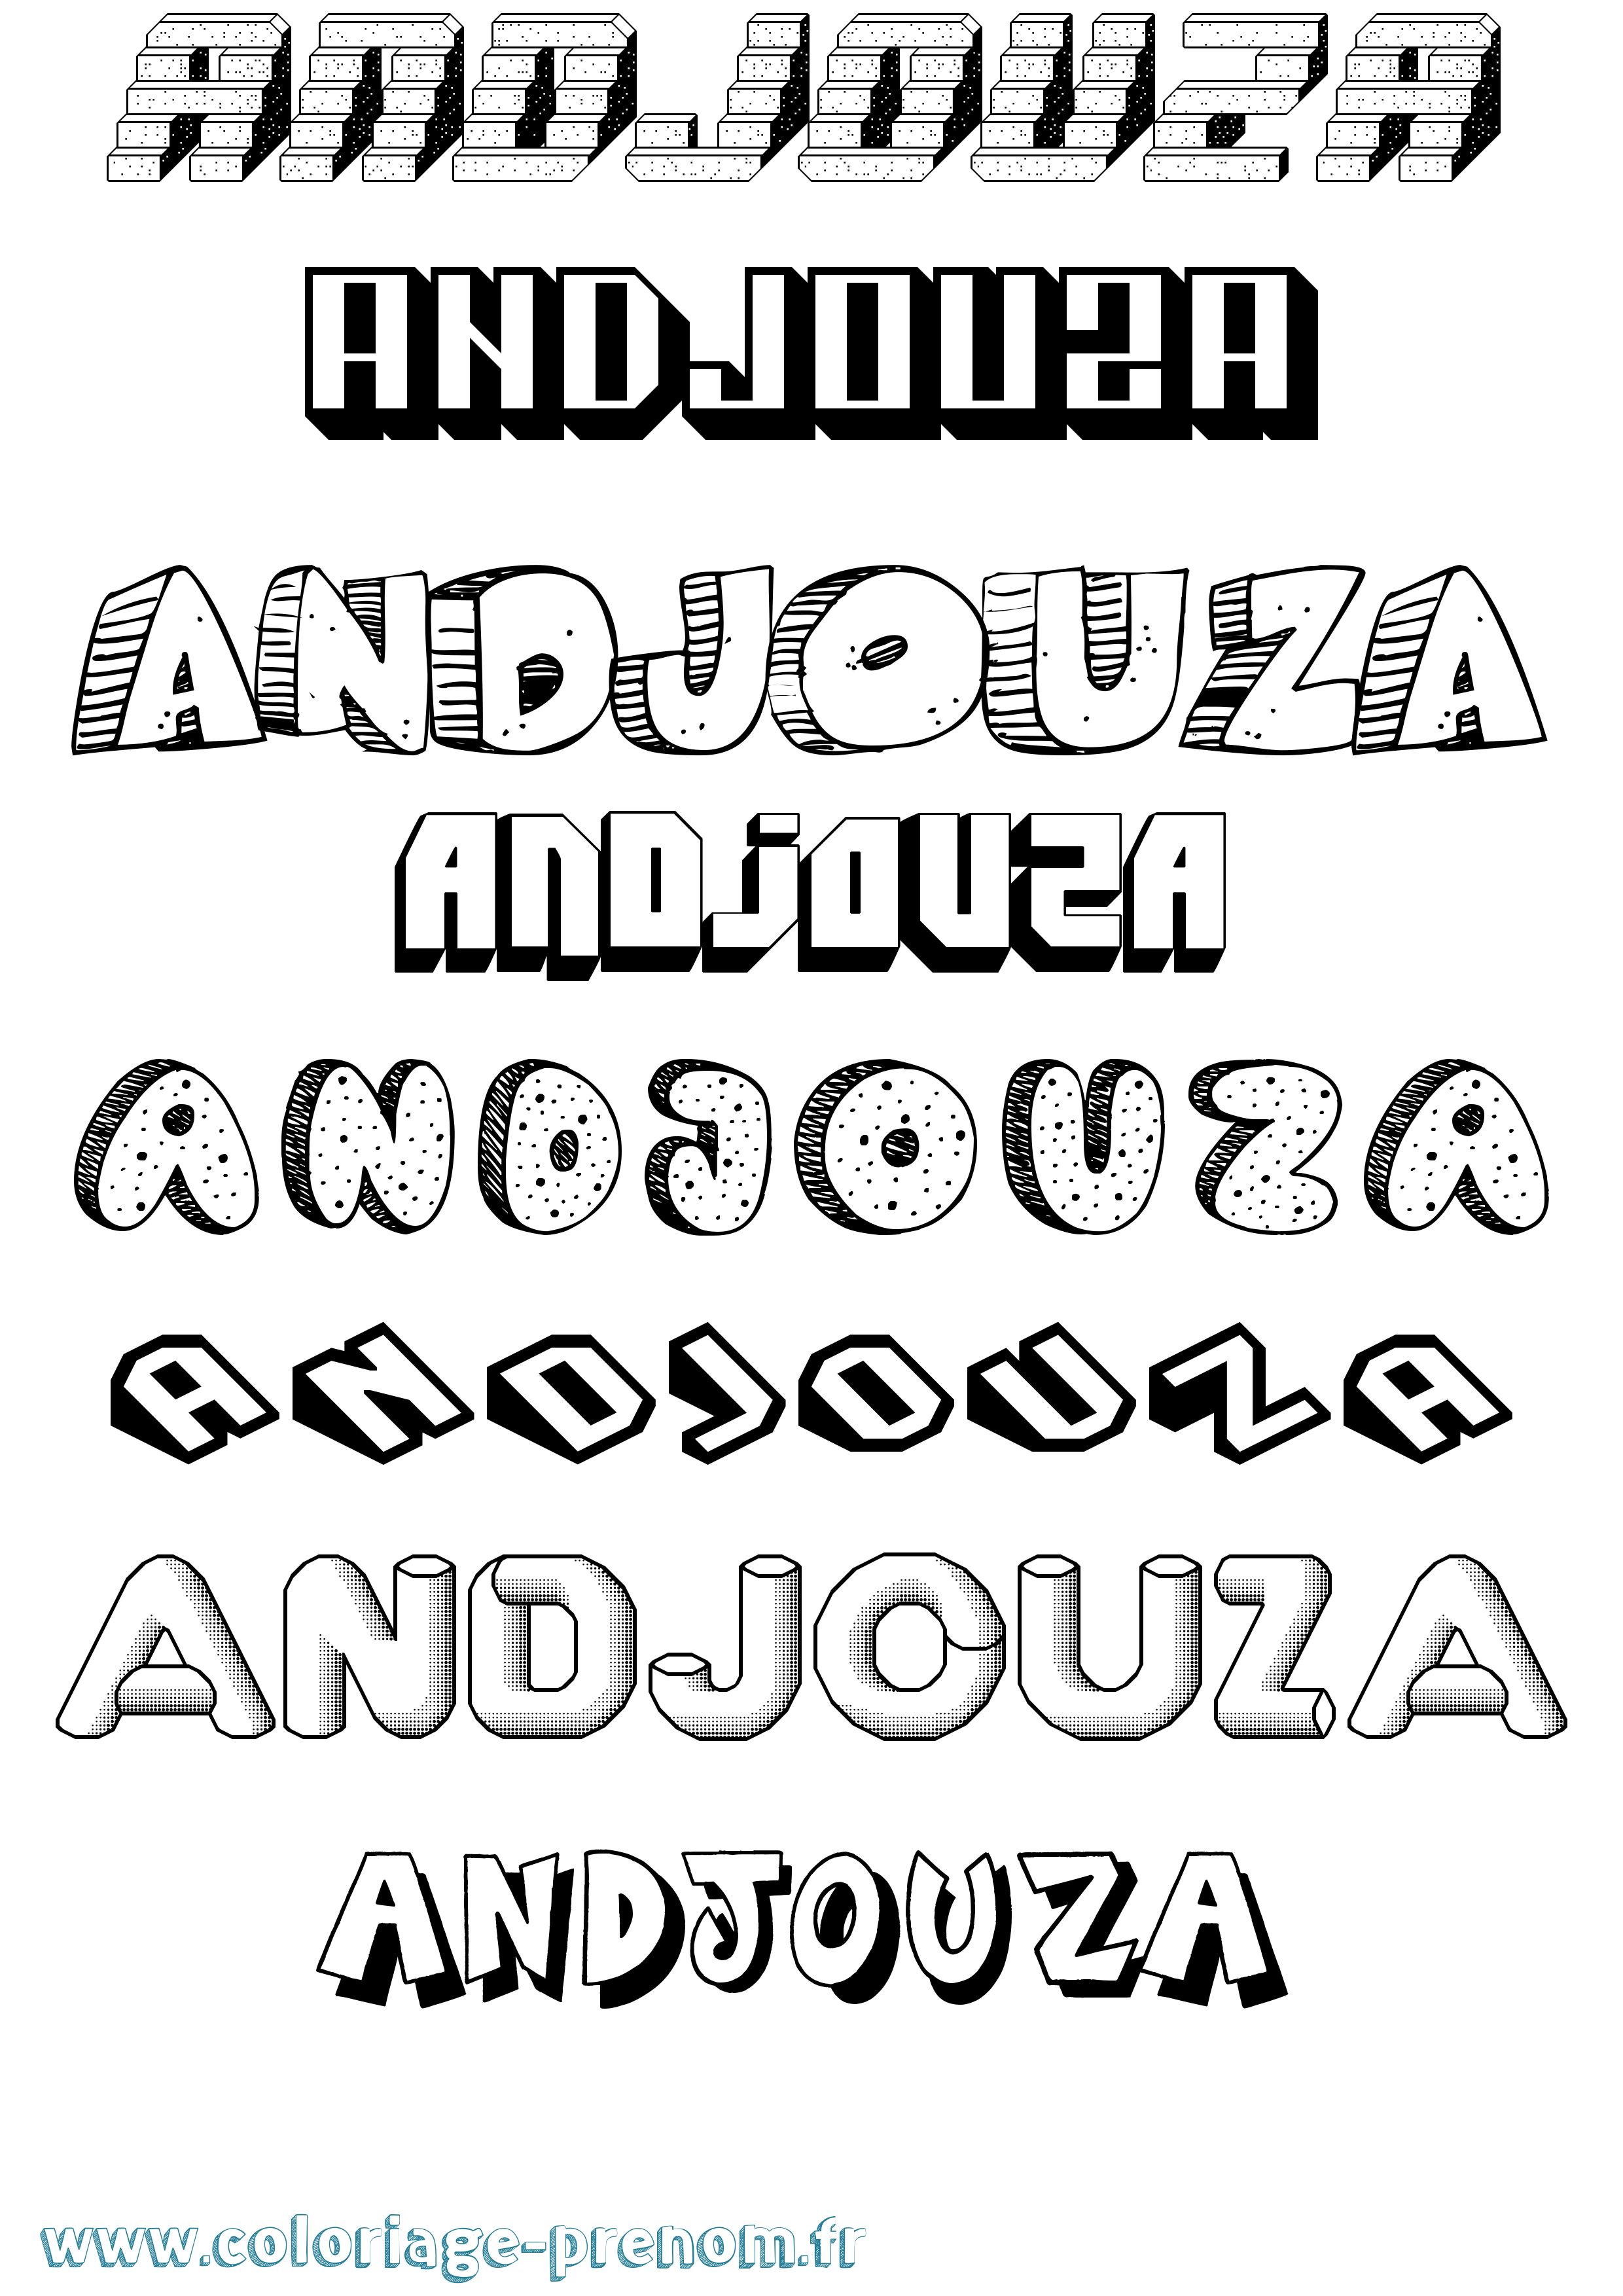 Coloriage prénom Andjouza Effet 3D